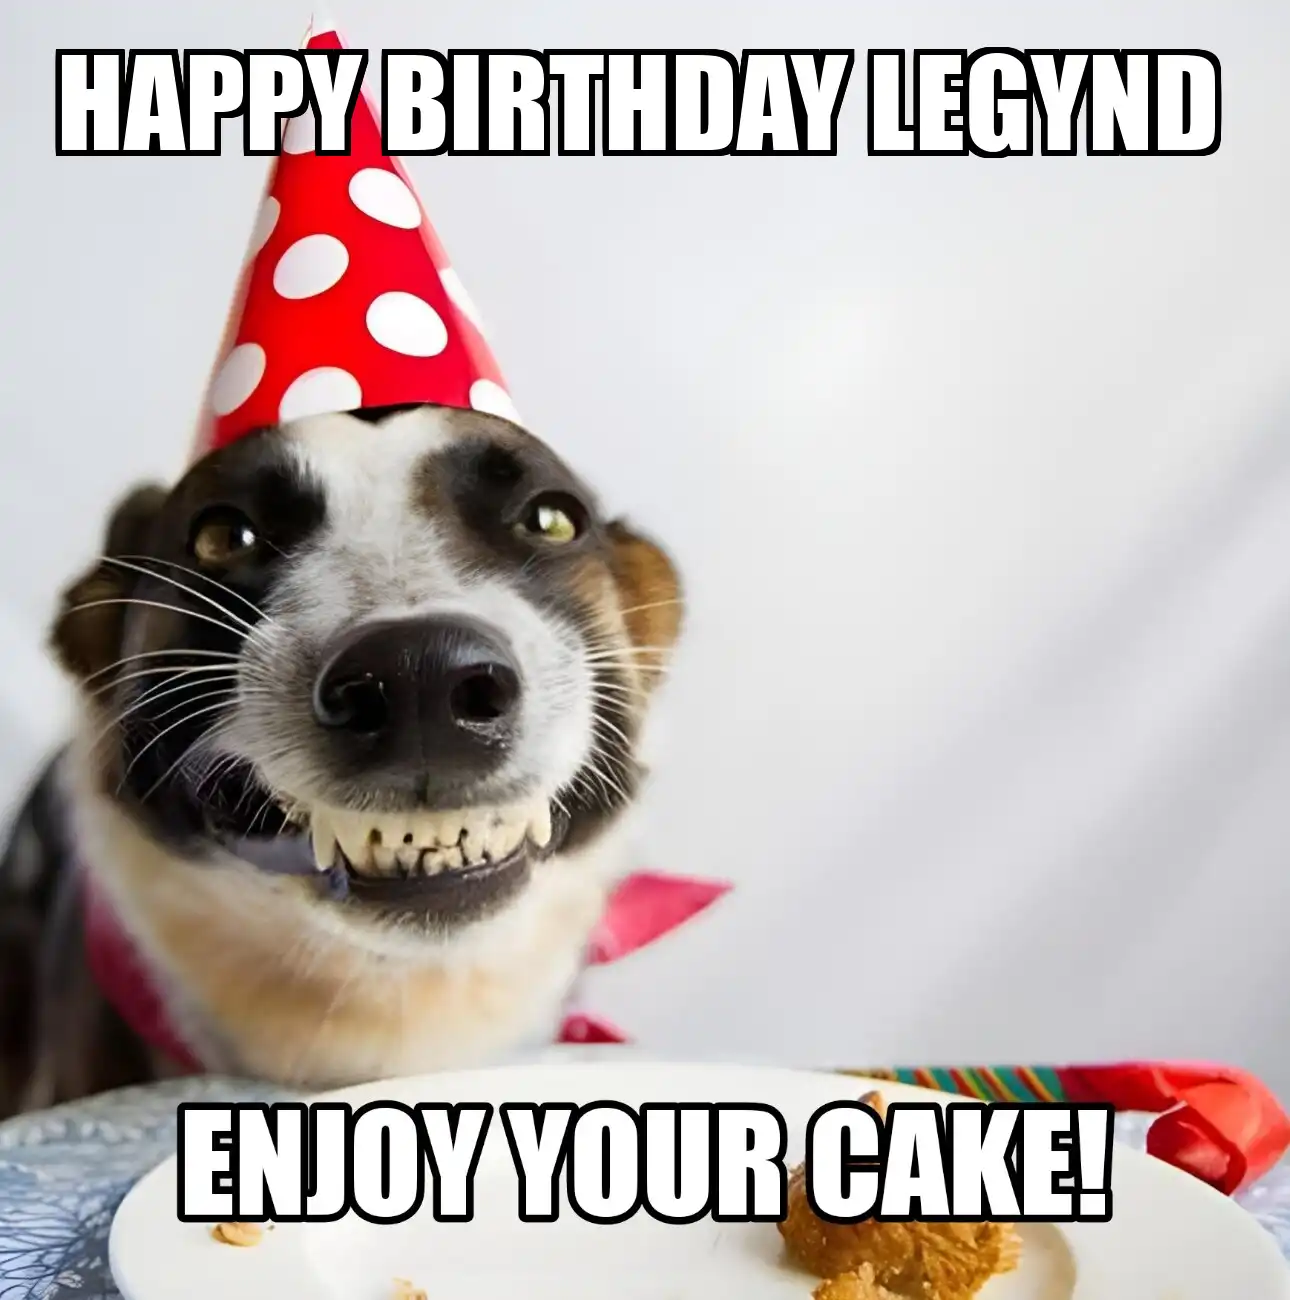 Happy Birthday Legynd Enjoy Your Cake Dog Meme